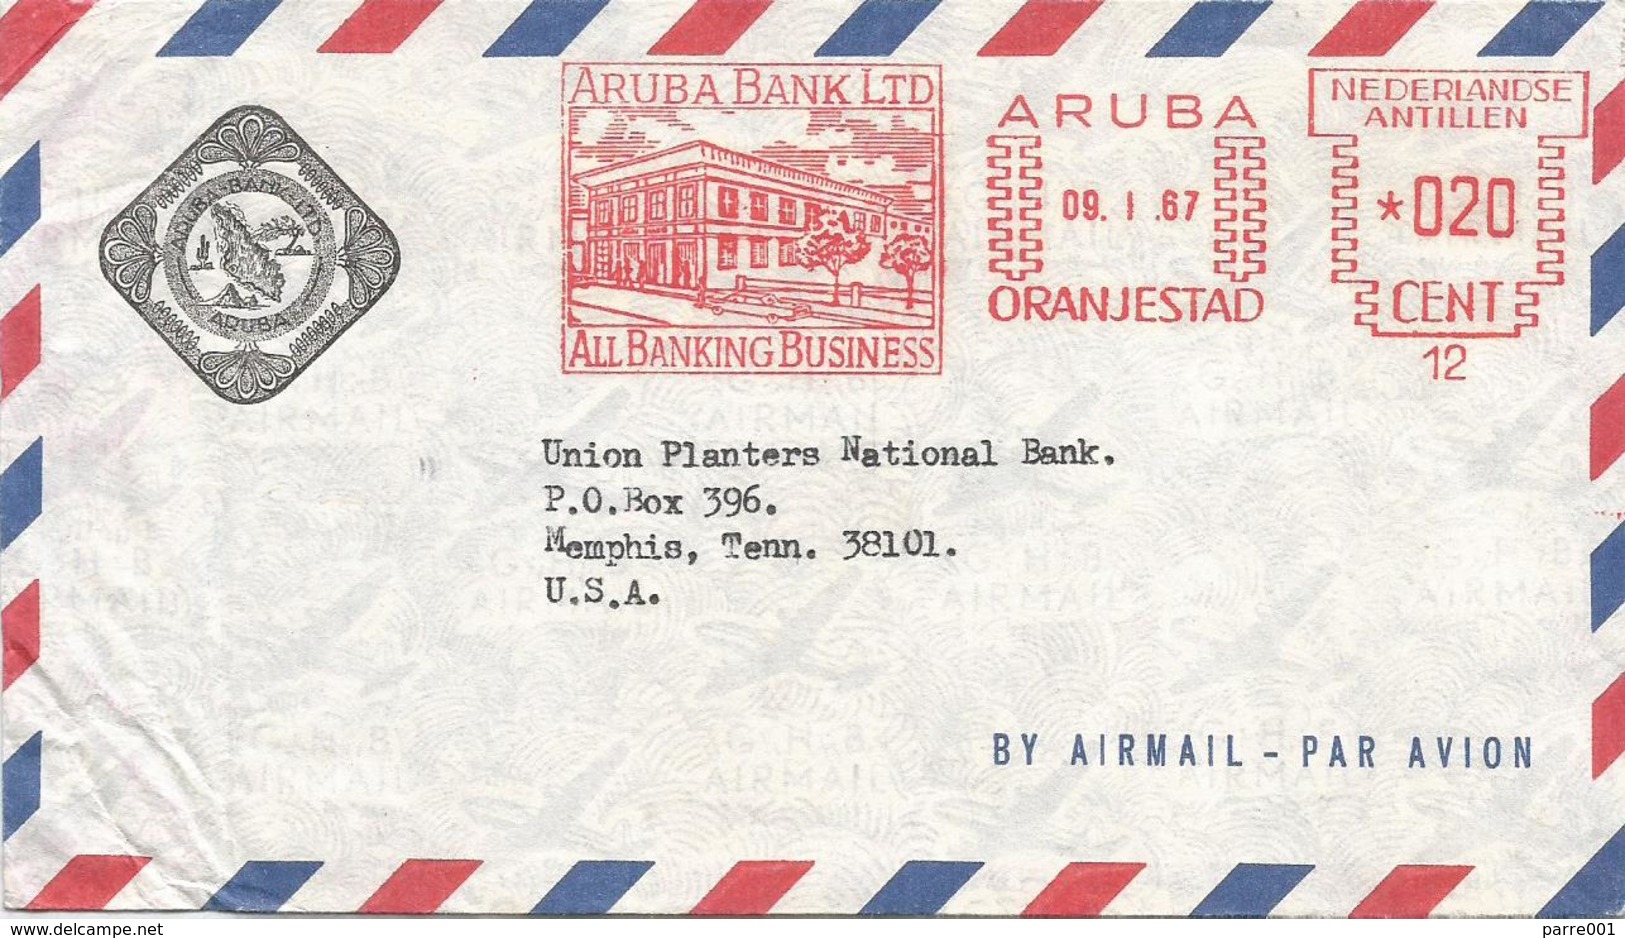 Aruba 1967 Oranjestad Meter Francotyp “Cc” 12 Slogan Bank Cover - Curaçao, Nederlandse Antillen, Aruba